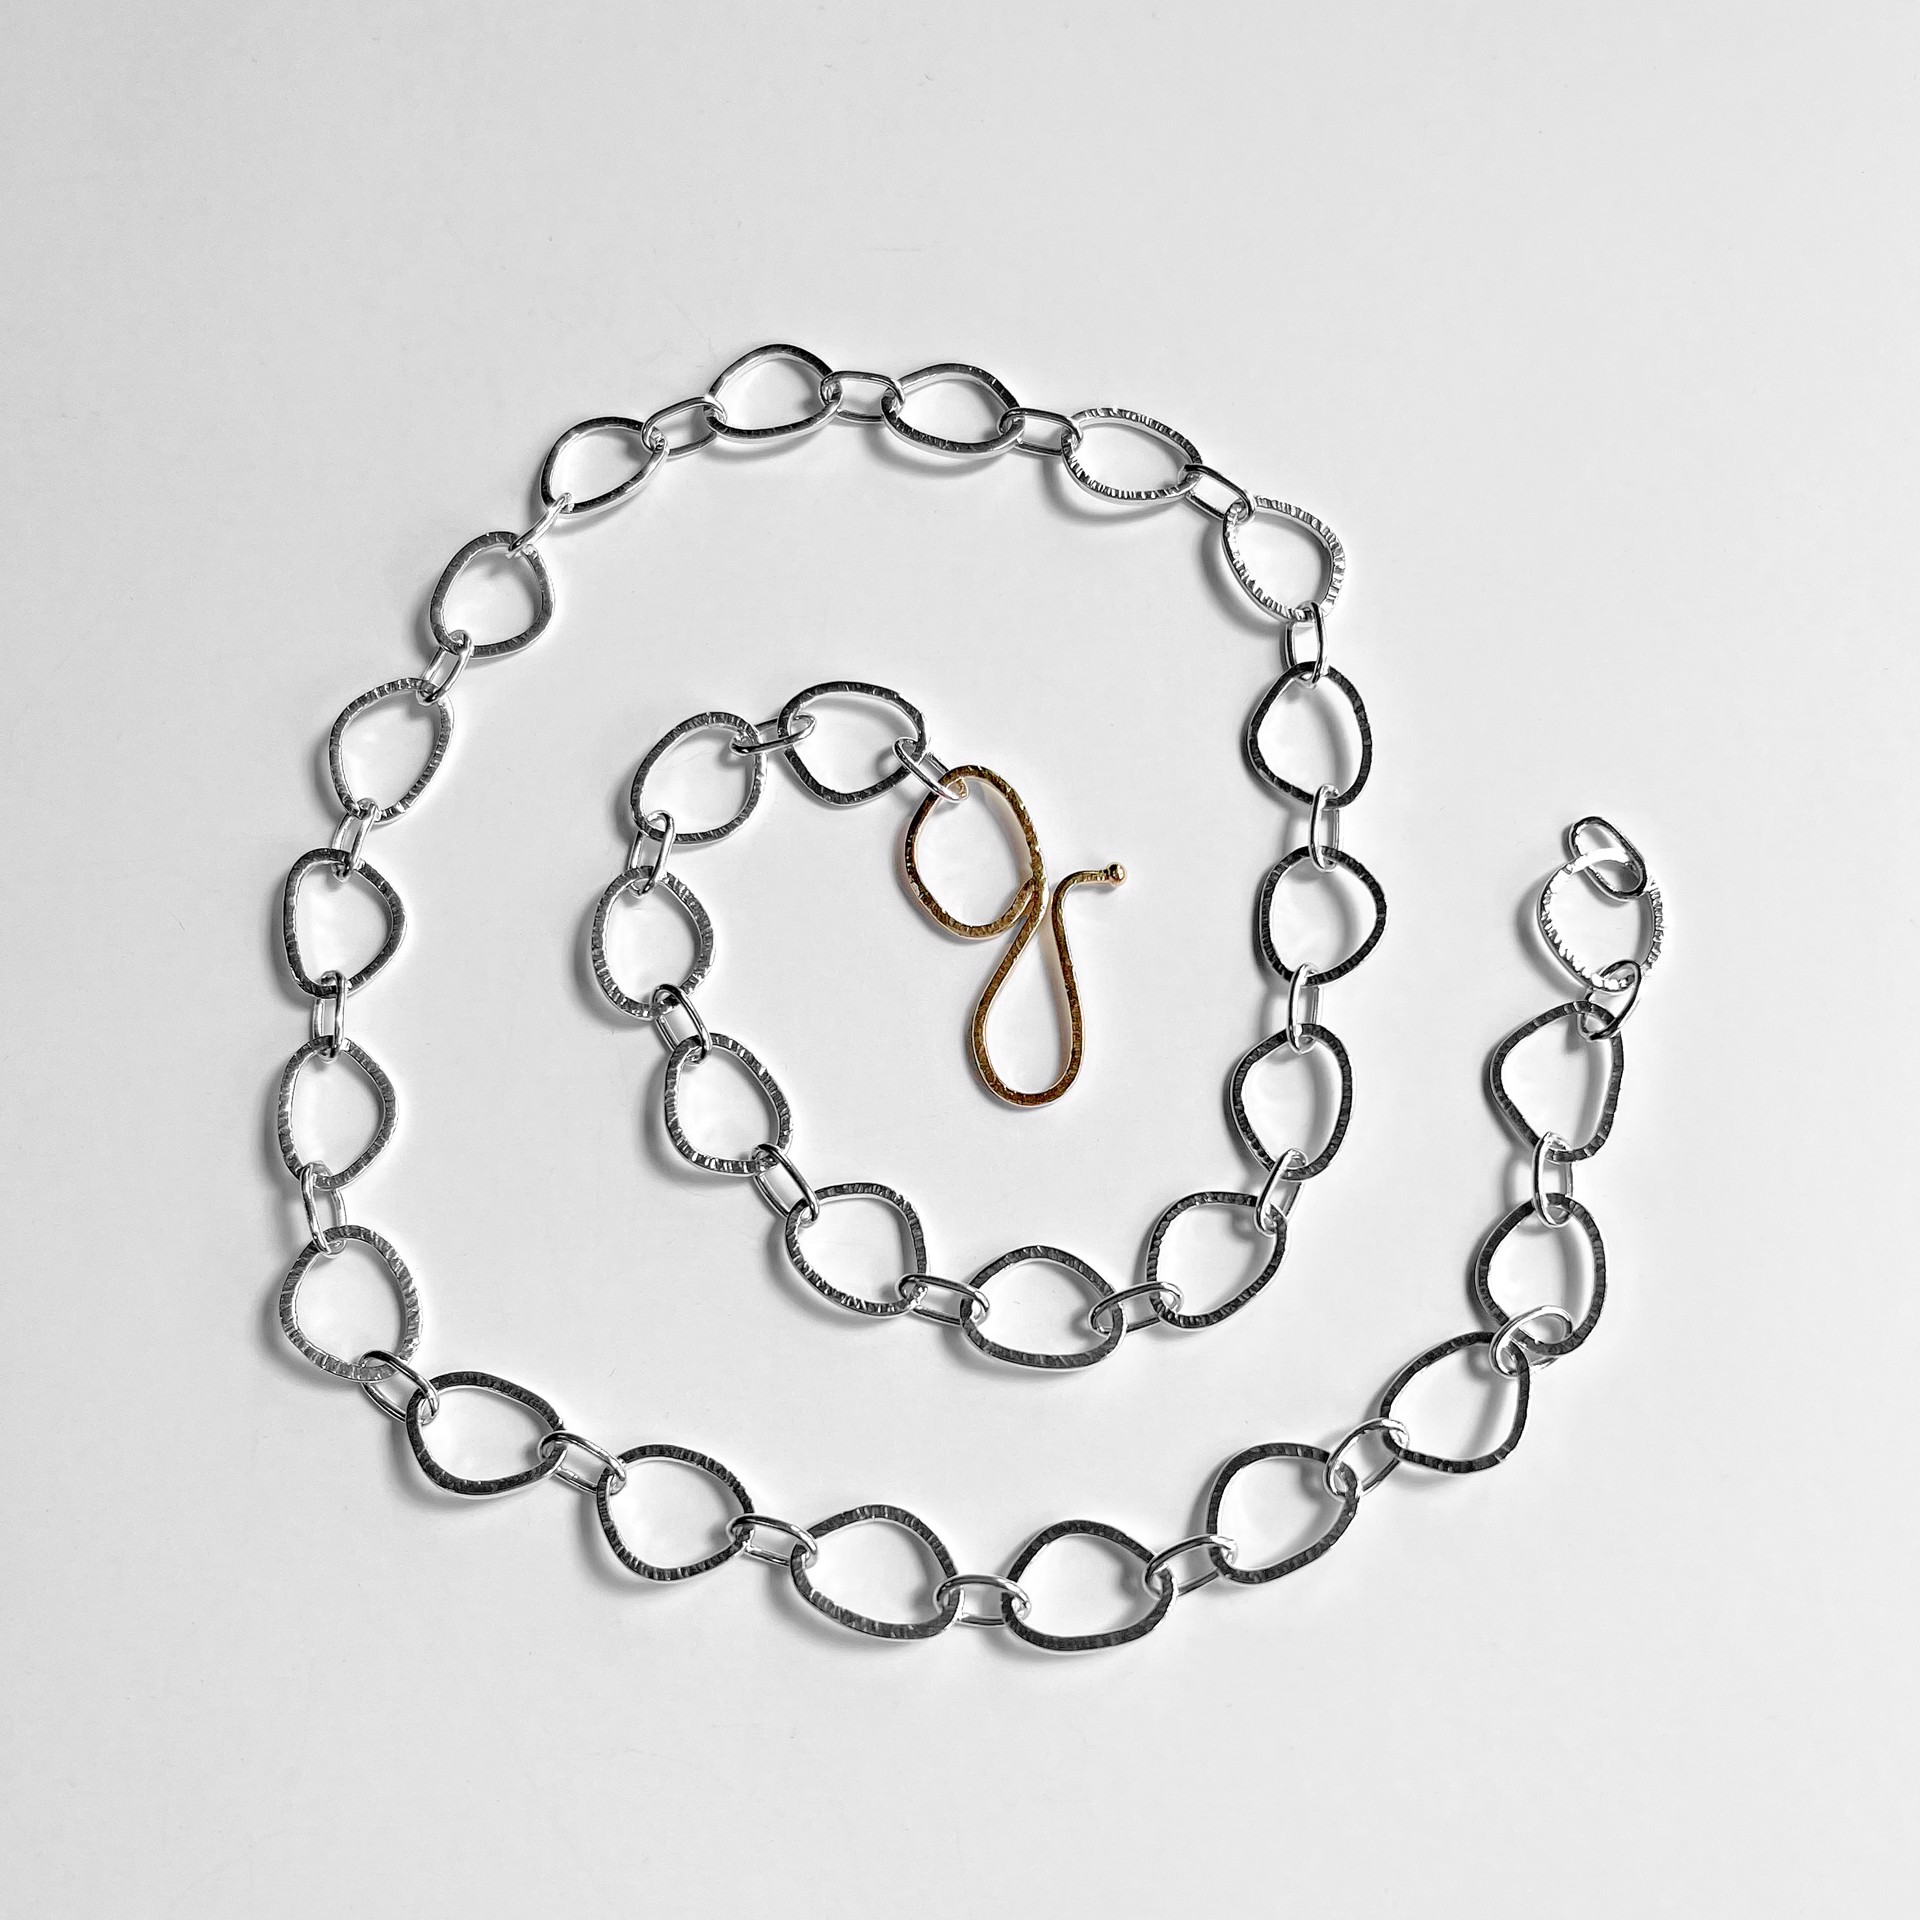 Q-Link Necklace by Amerinda Alpern